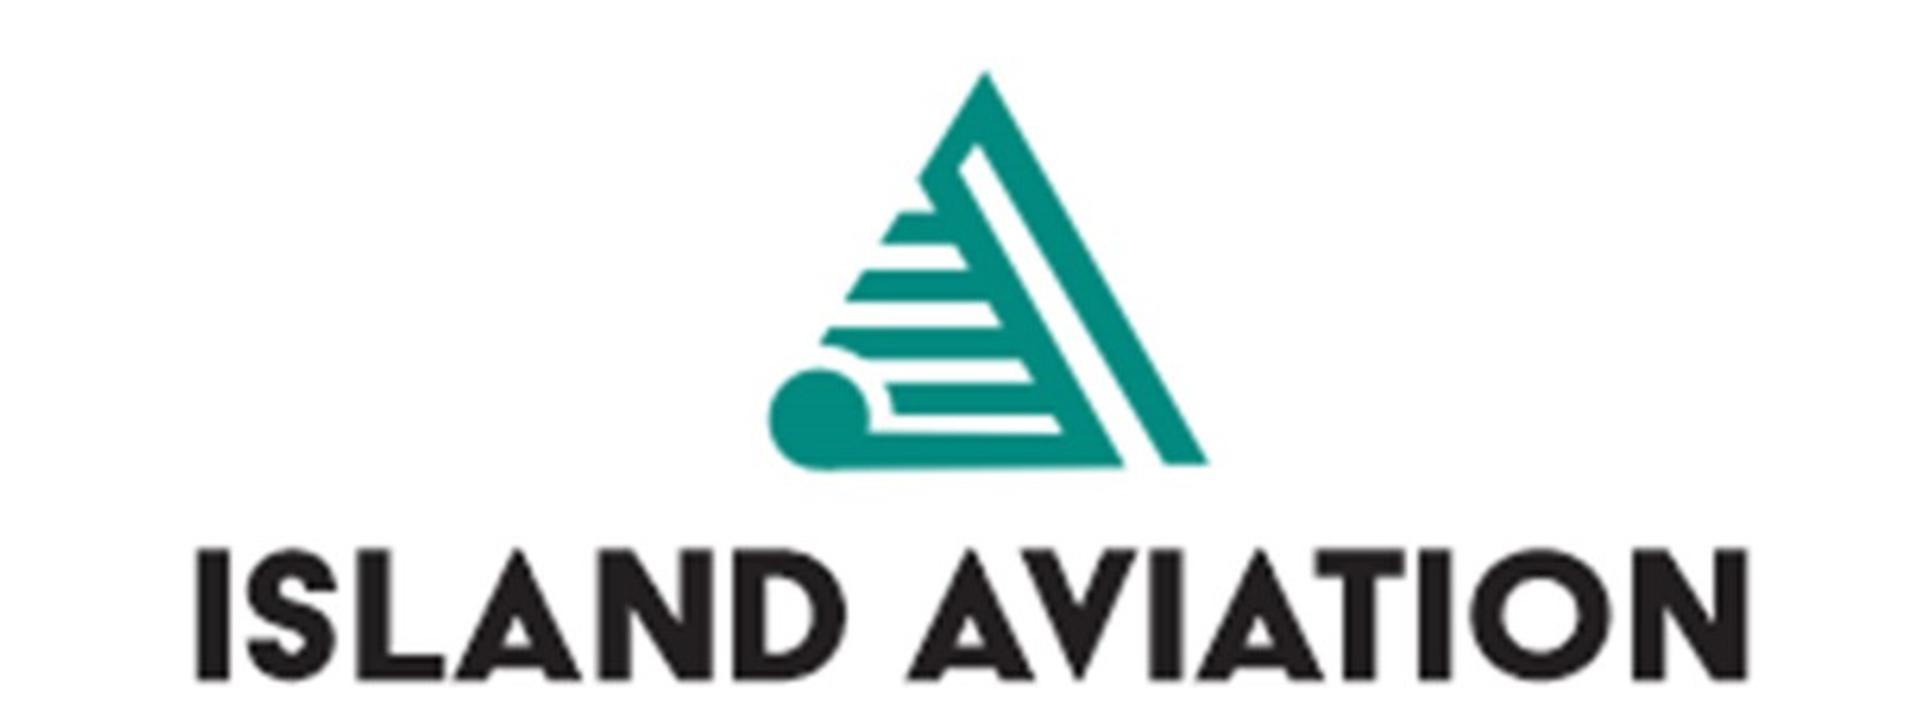 Island Aviation logo (1).jpg